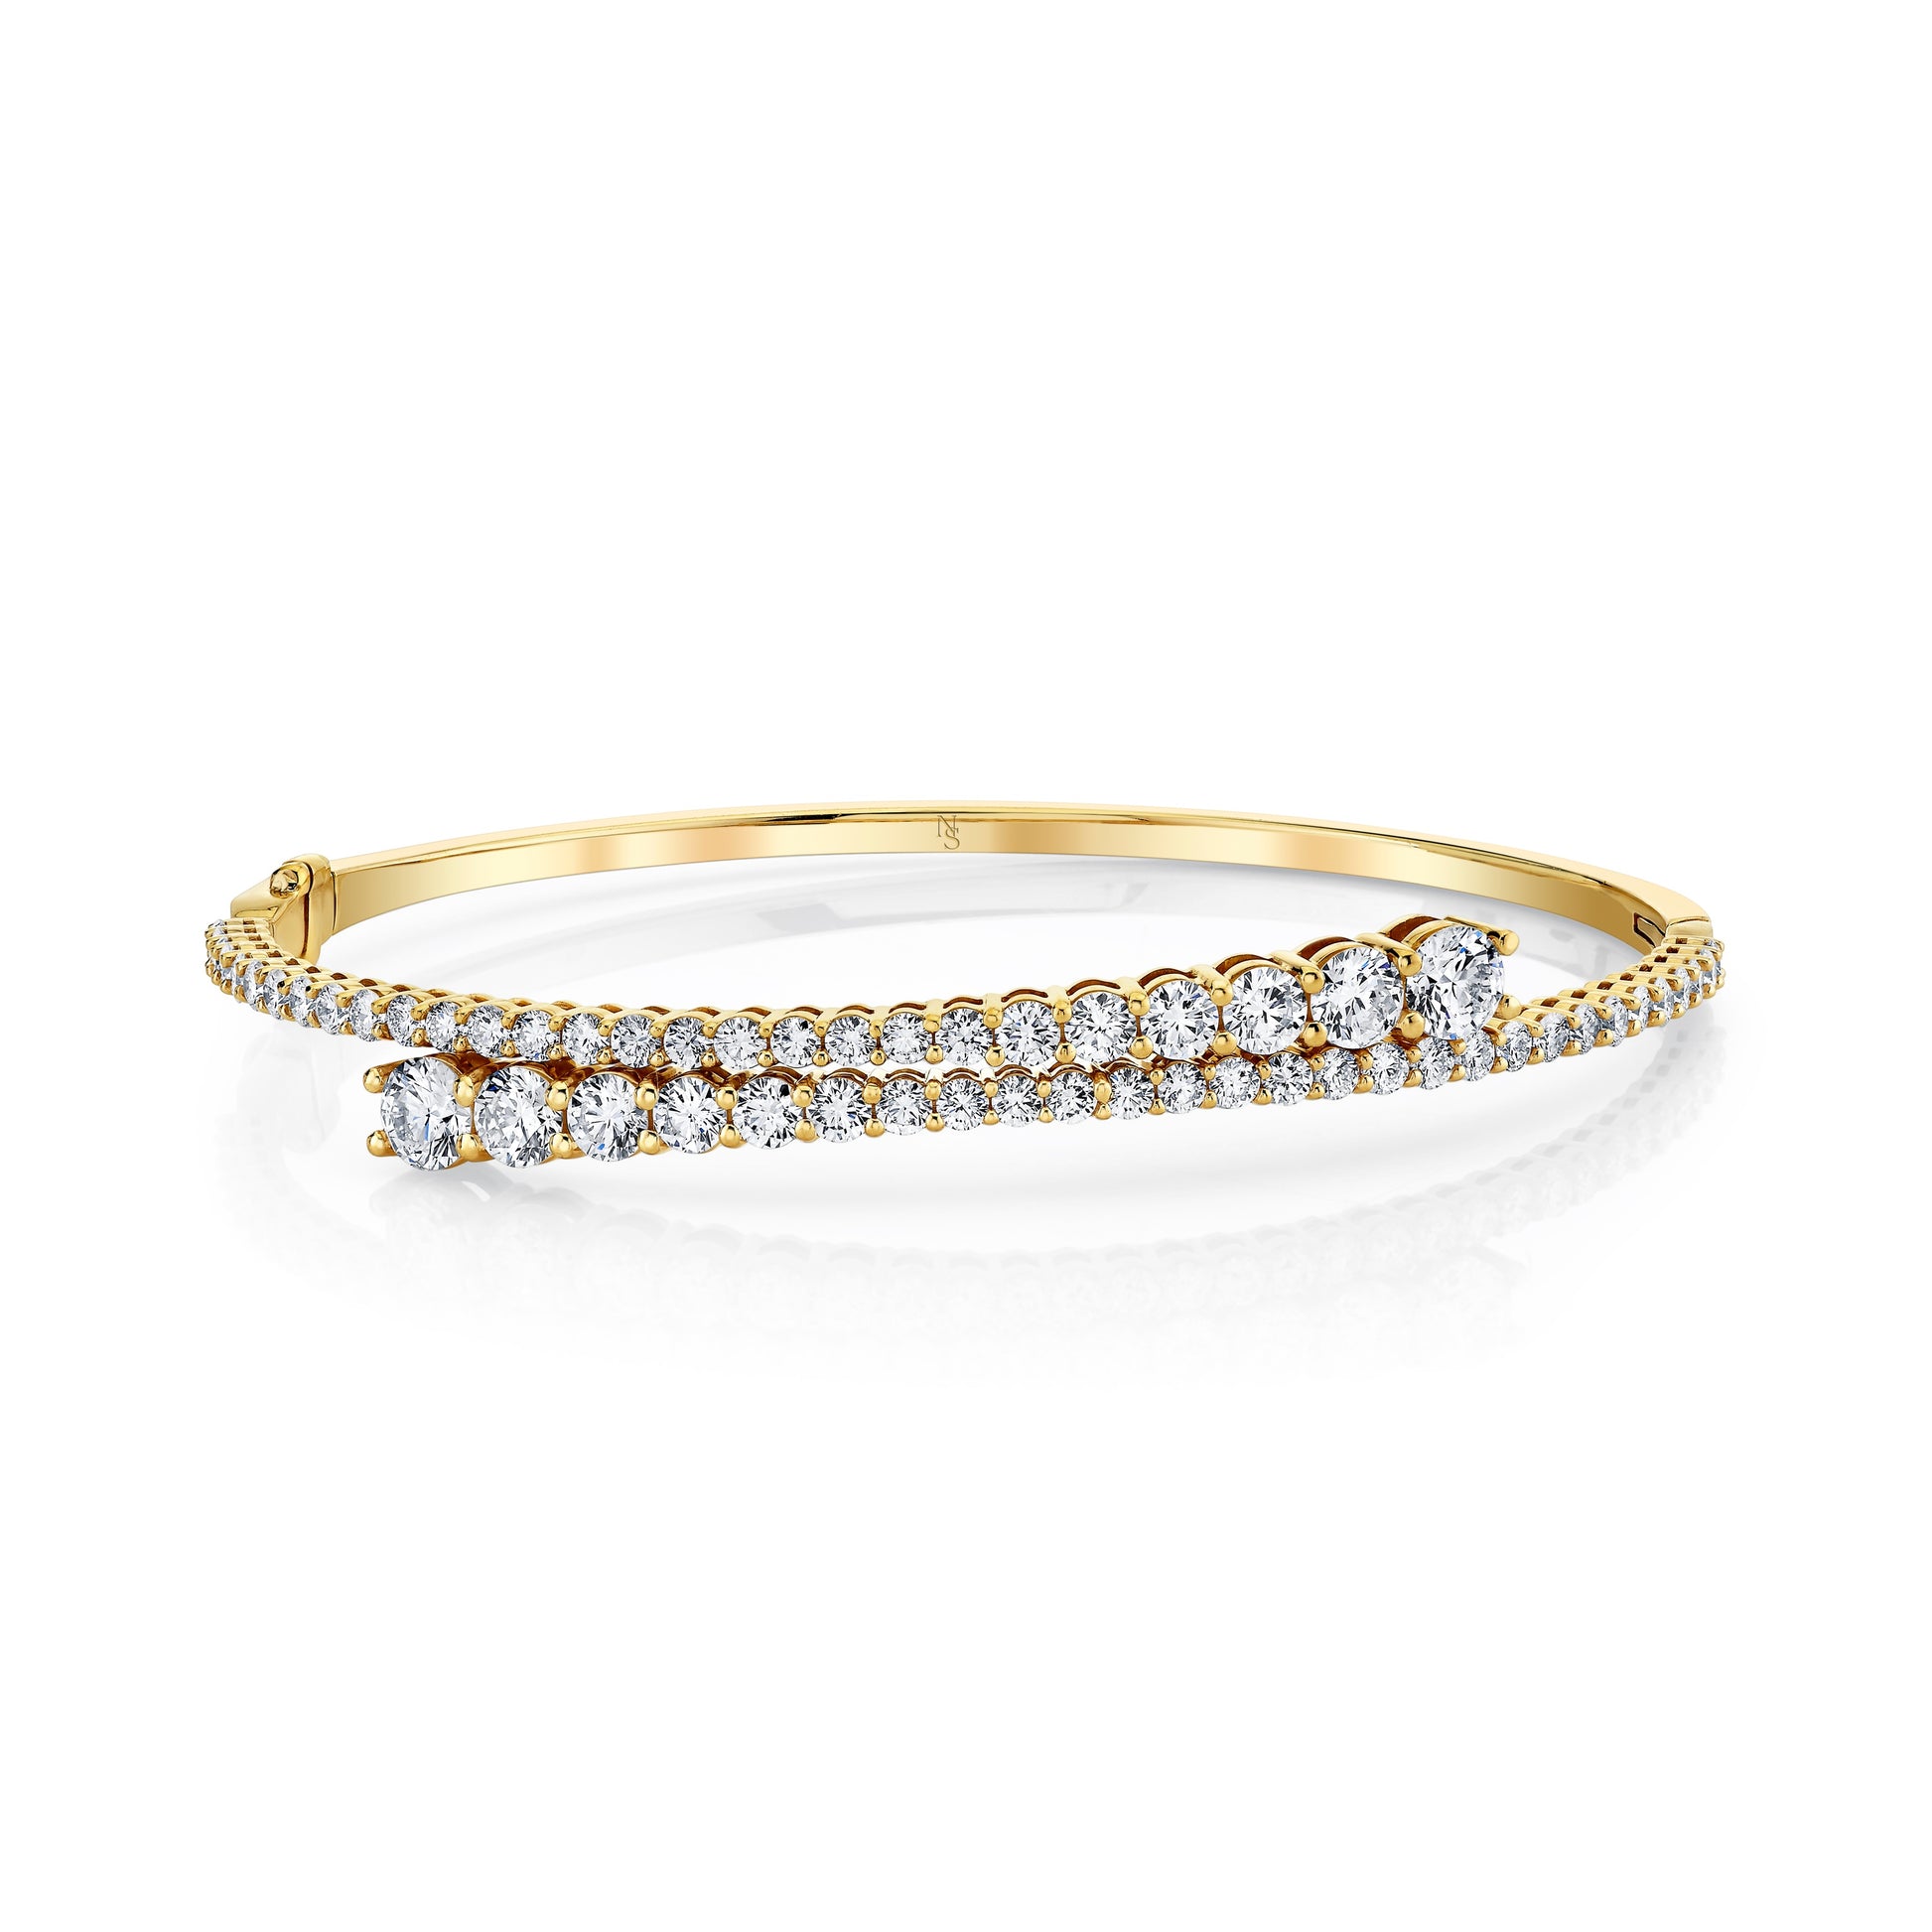 Diamond Bangle Bracelet | Zundel's Jewelry